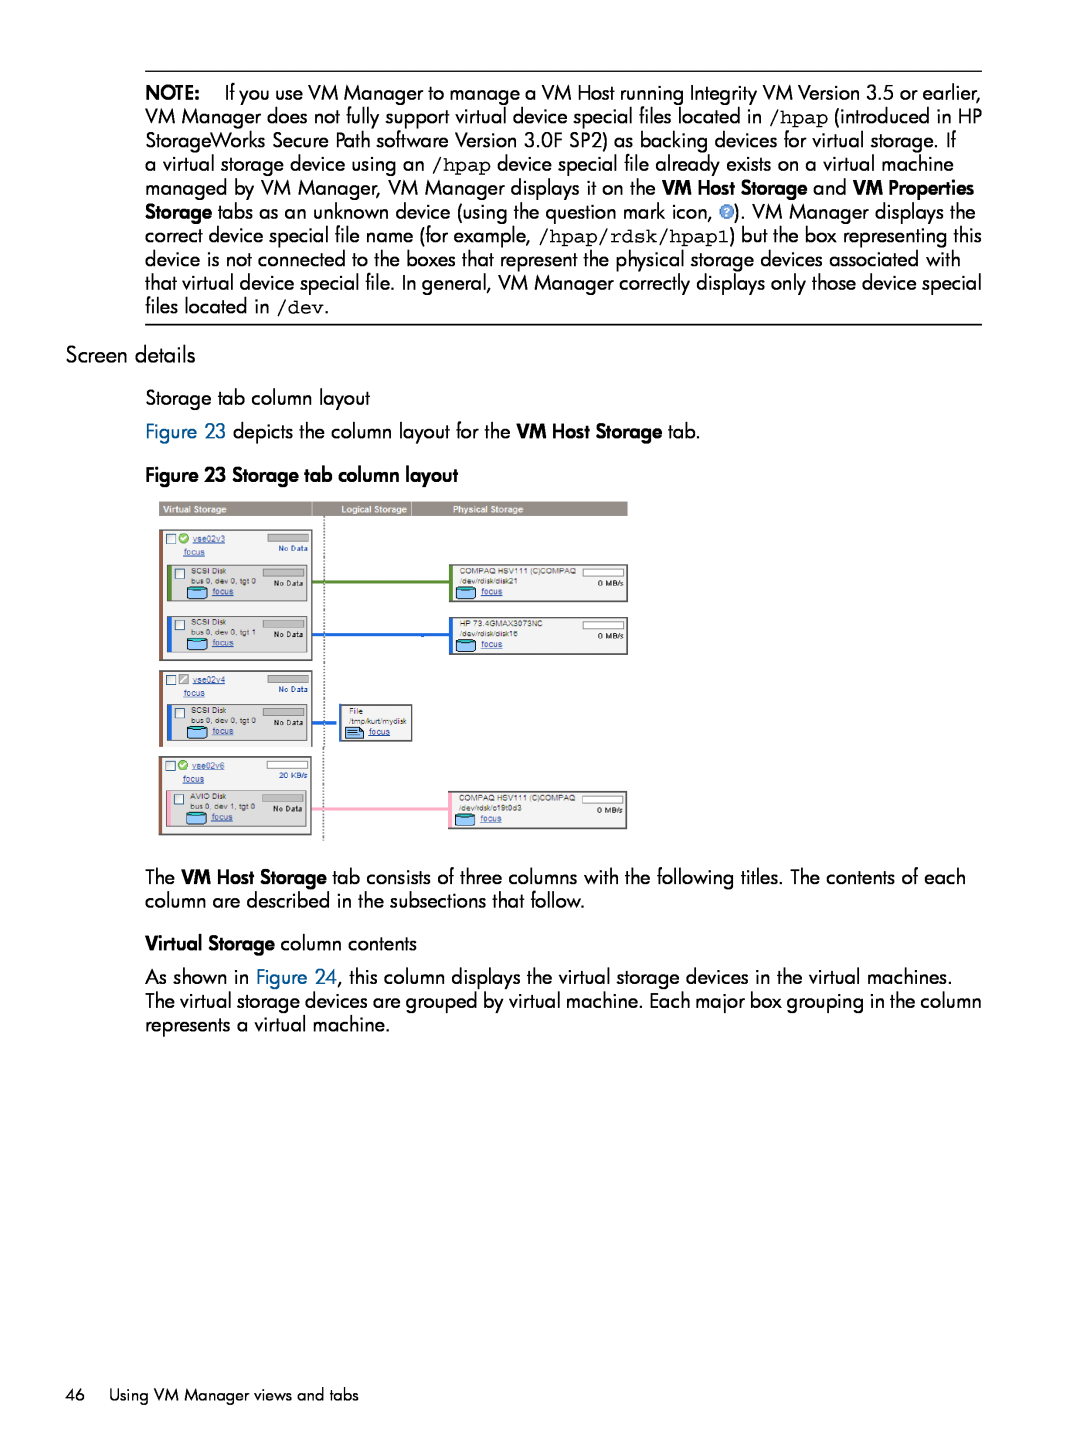 HP UX vPars and Integrity VM v6 manual Screen details, Storage tab column layout 